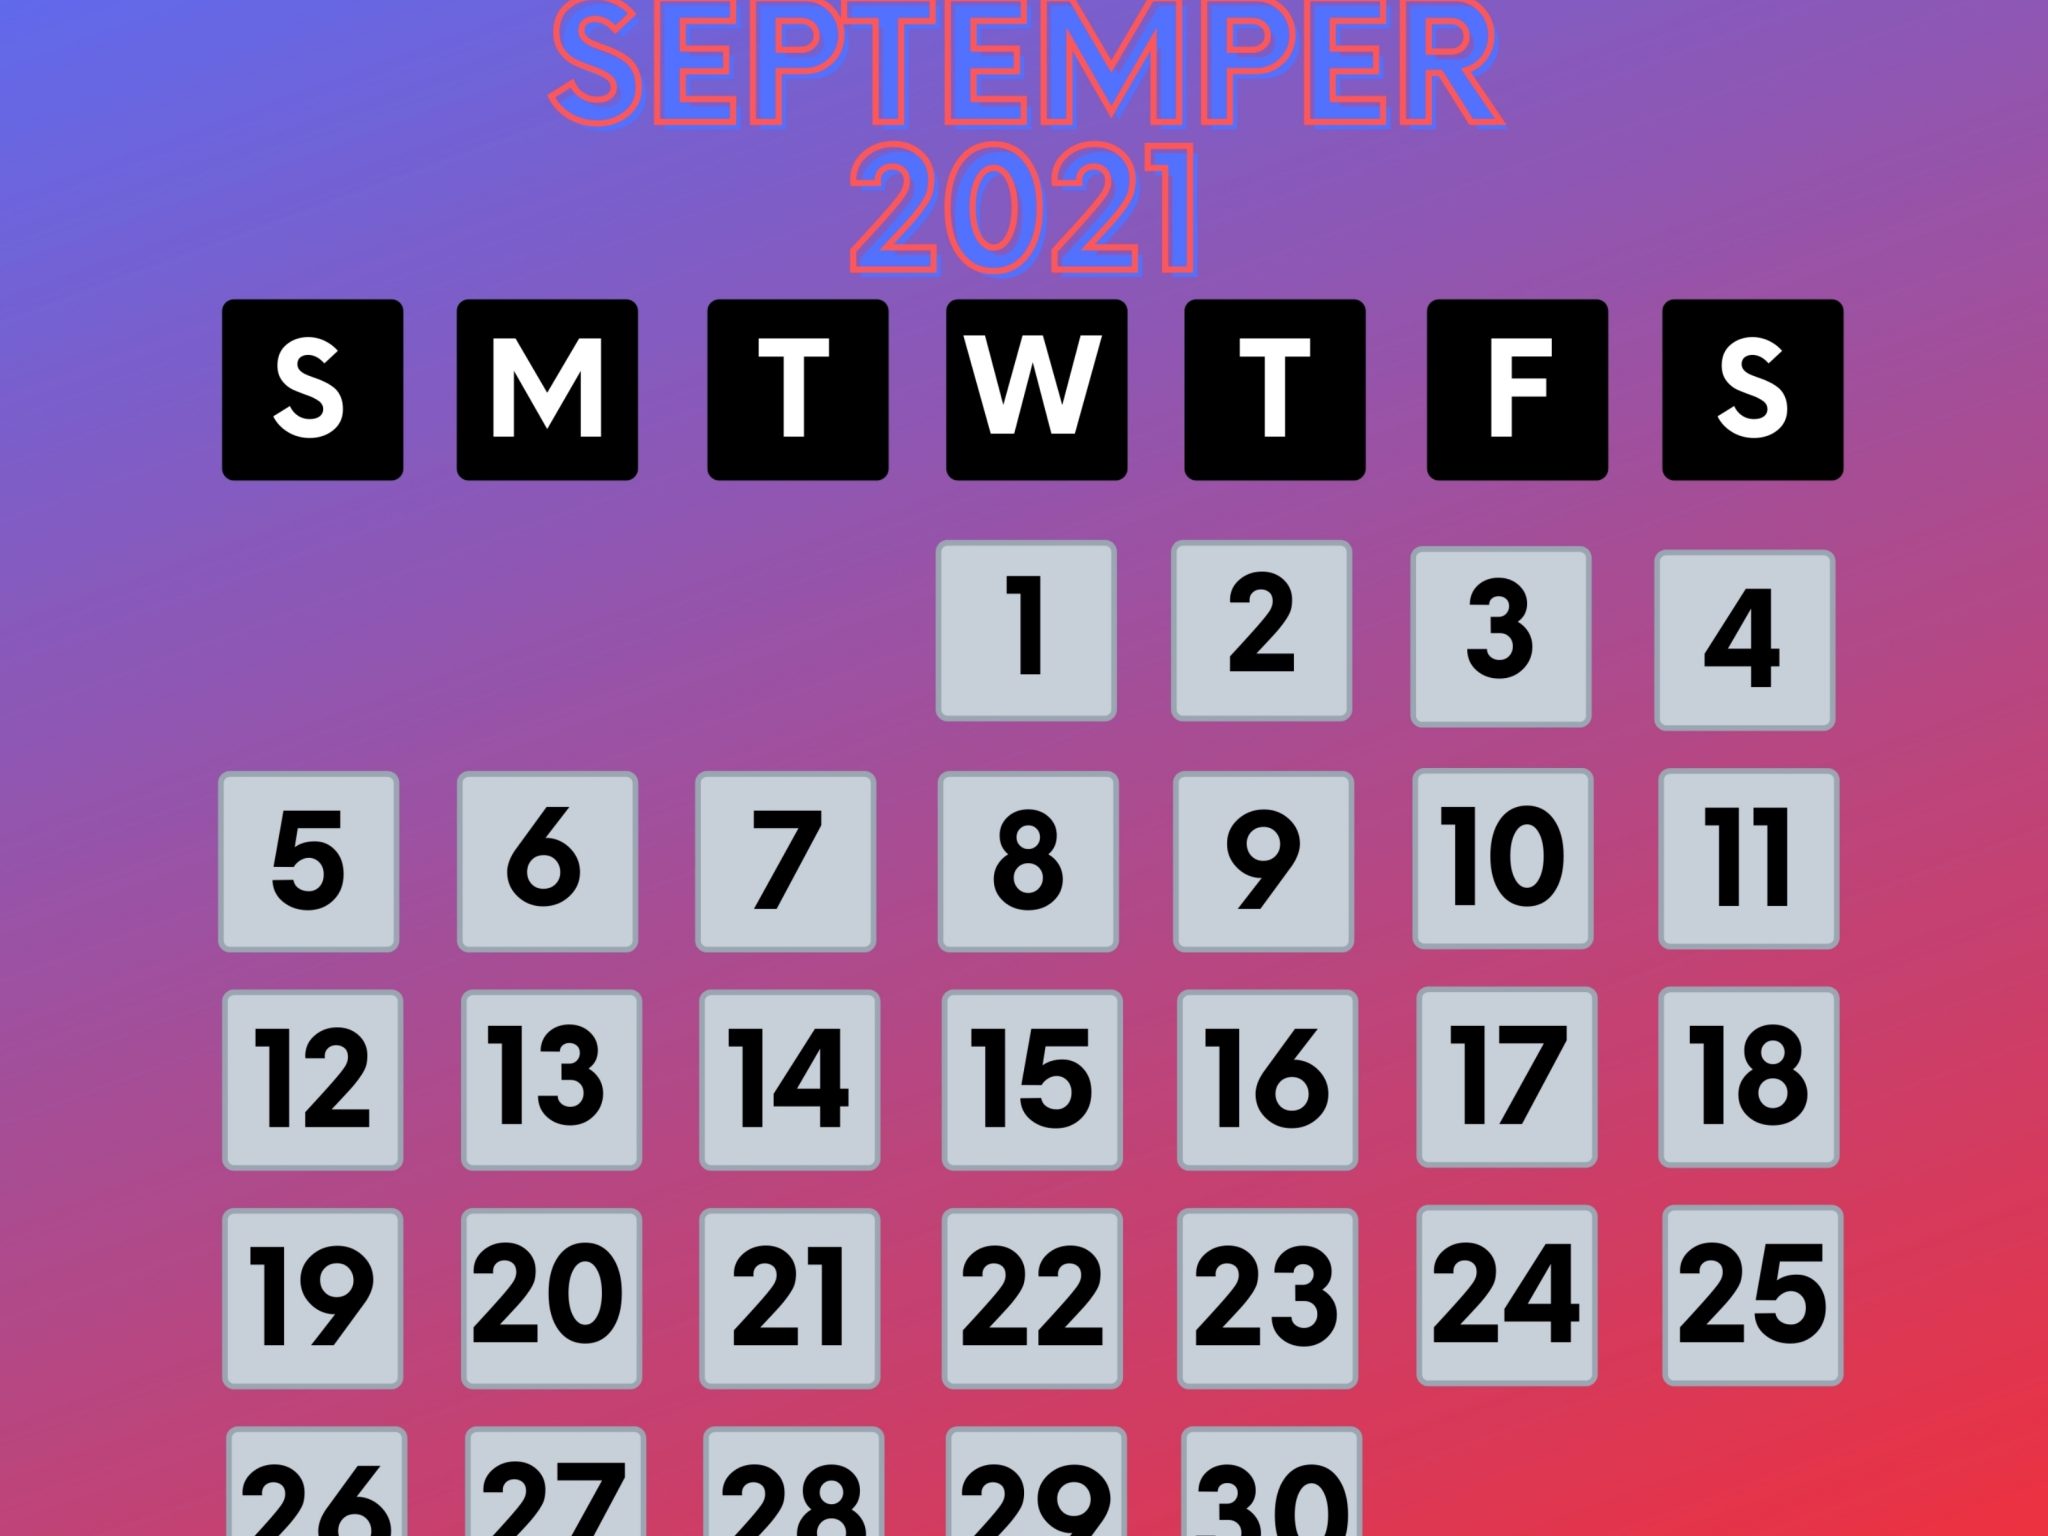 2048x1536 wallpaper September 2021 Calendar iPad Wallpaper 2048x1536 pixels resolution